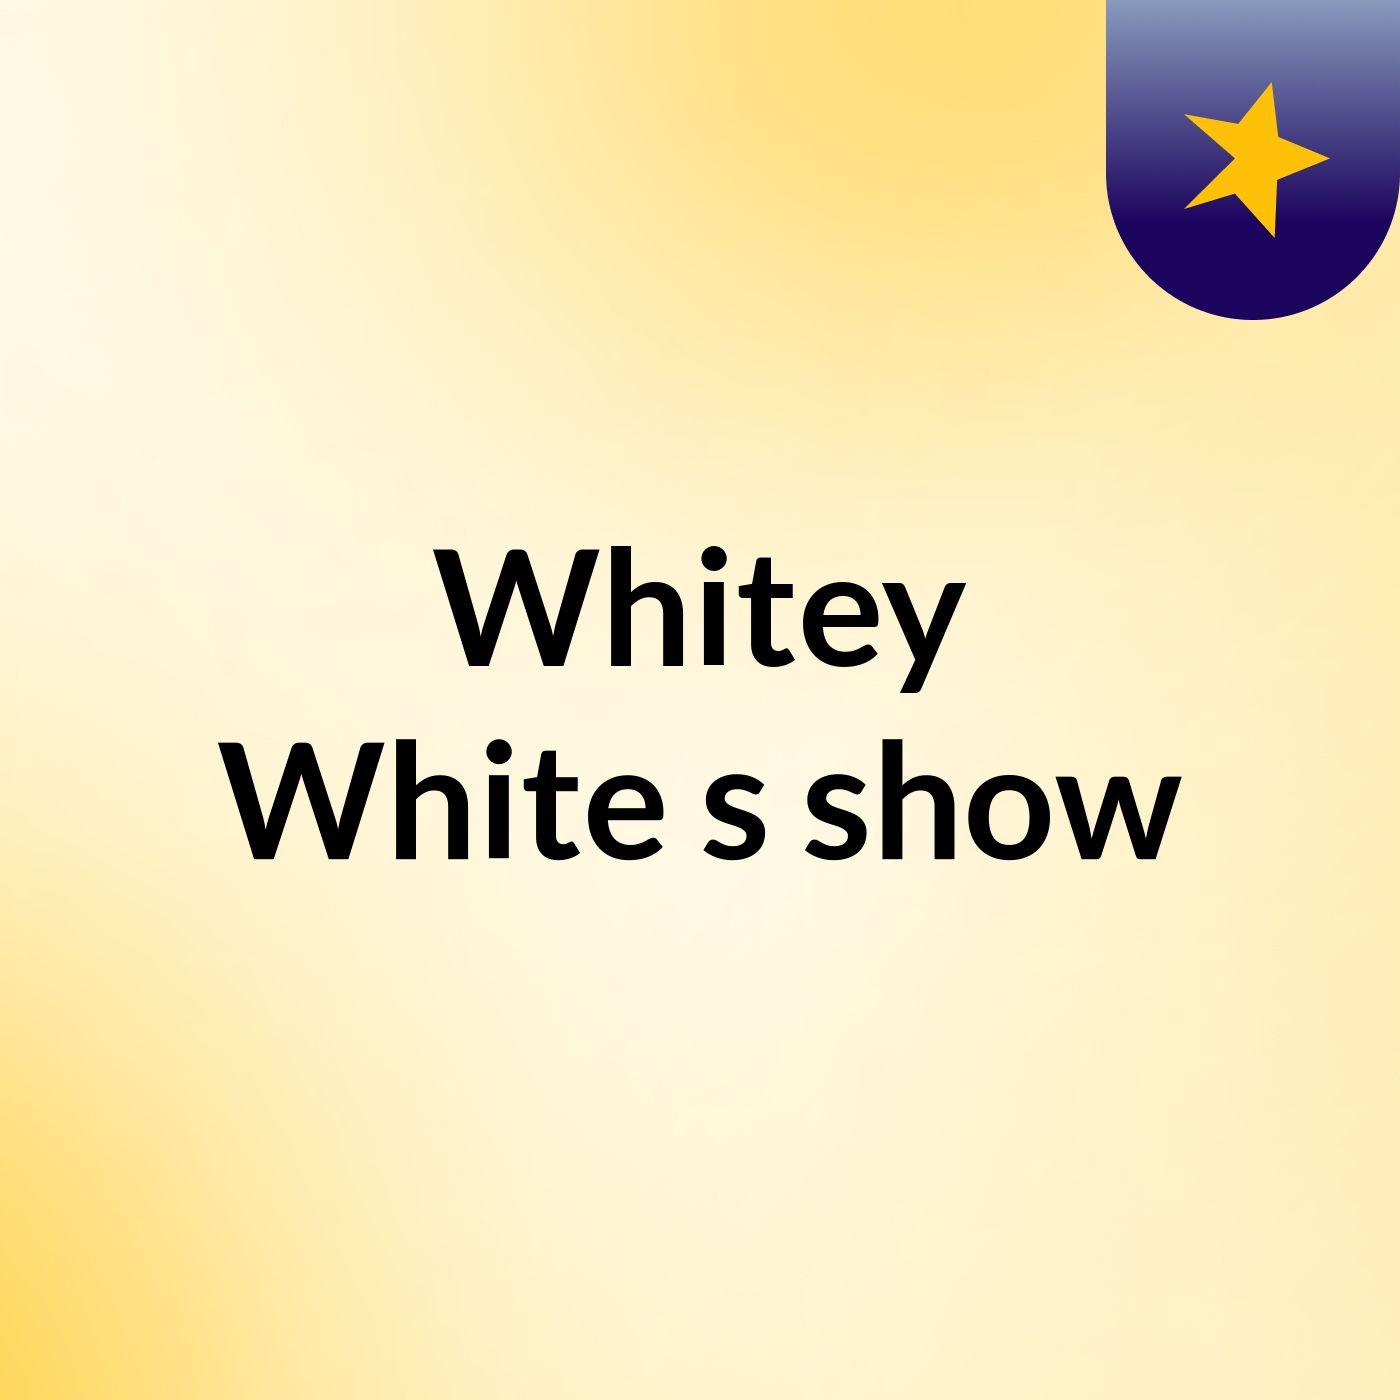 Whitey White's show